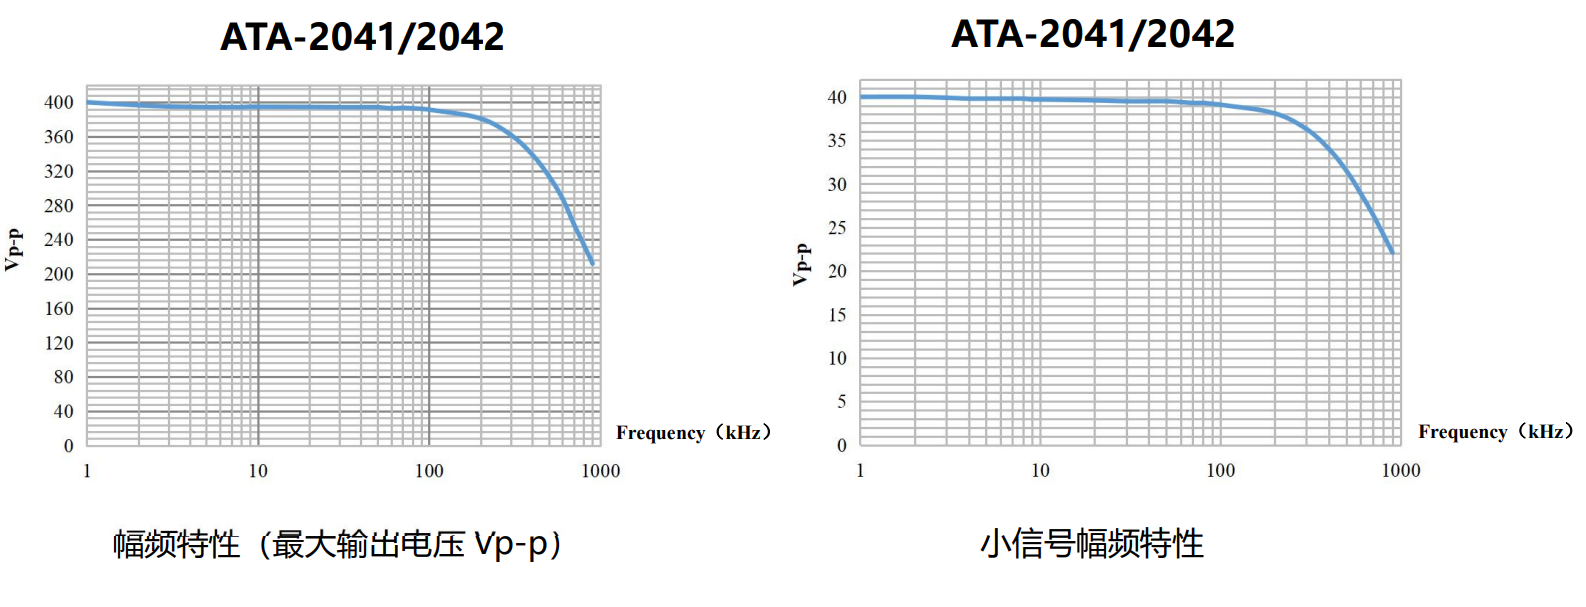 ATA-2042高压放大器